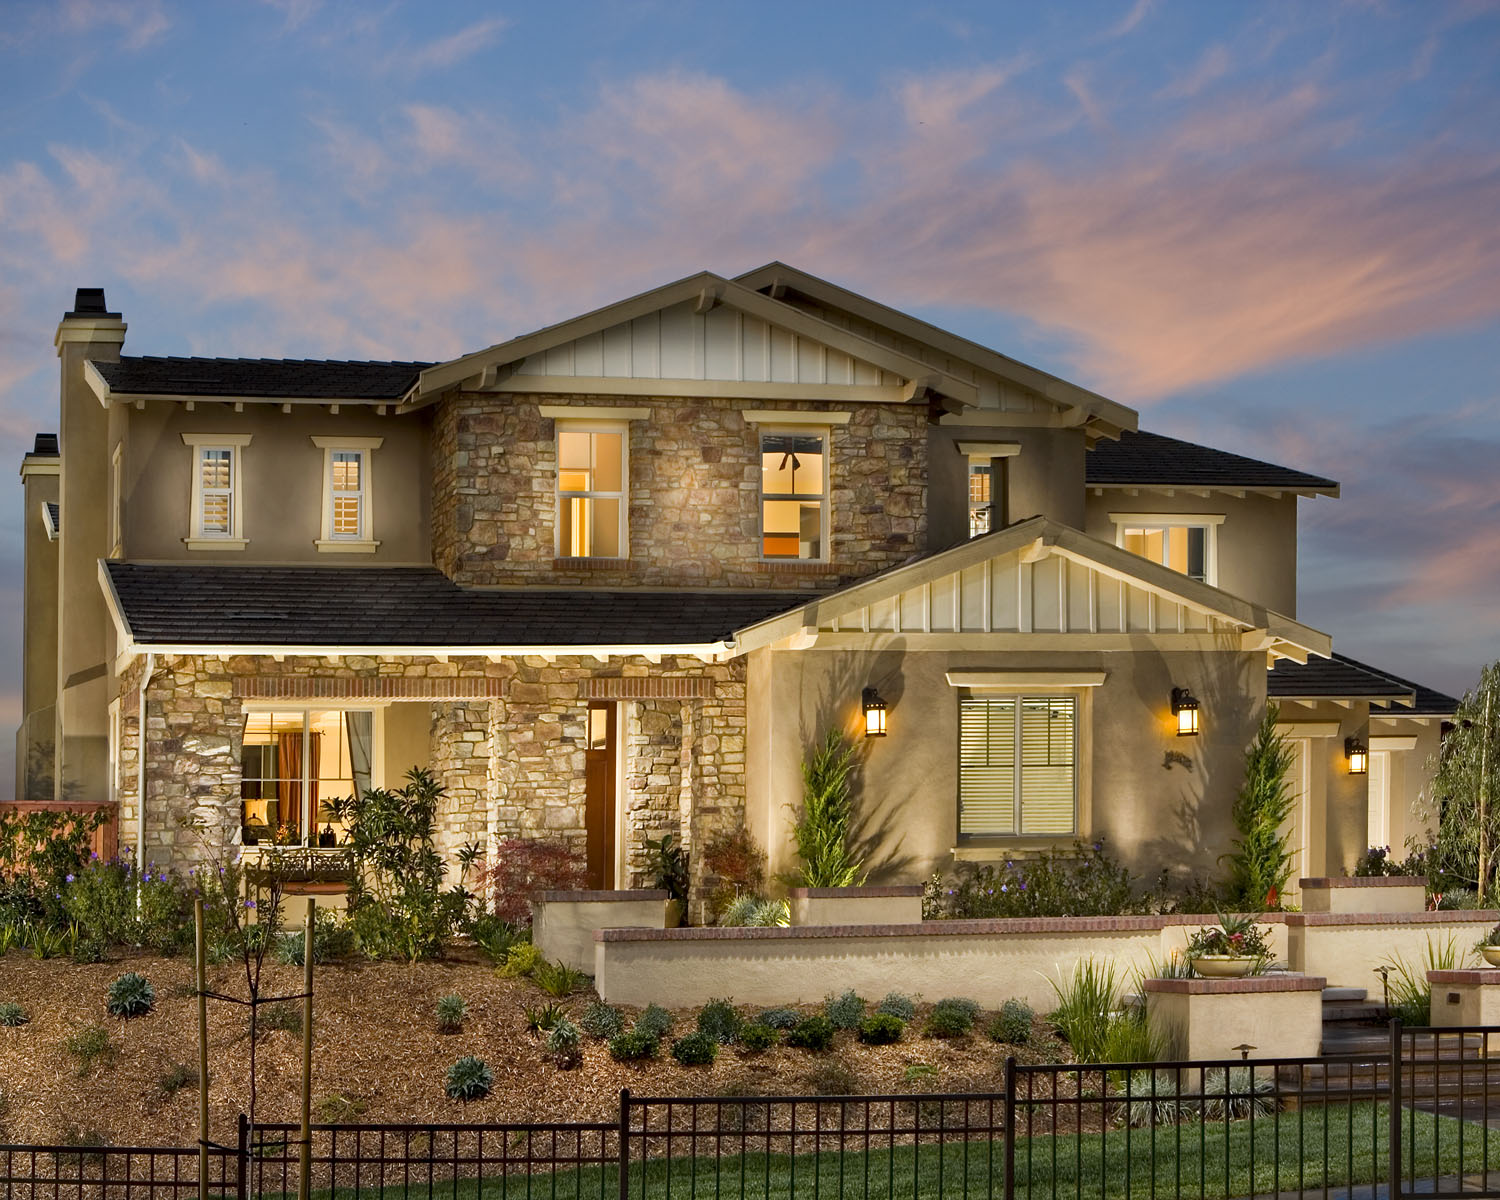 New home designs latest.: Modern big homes exterior designs San Diego.